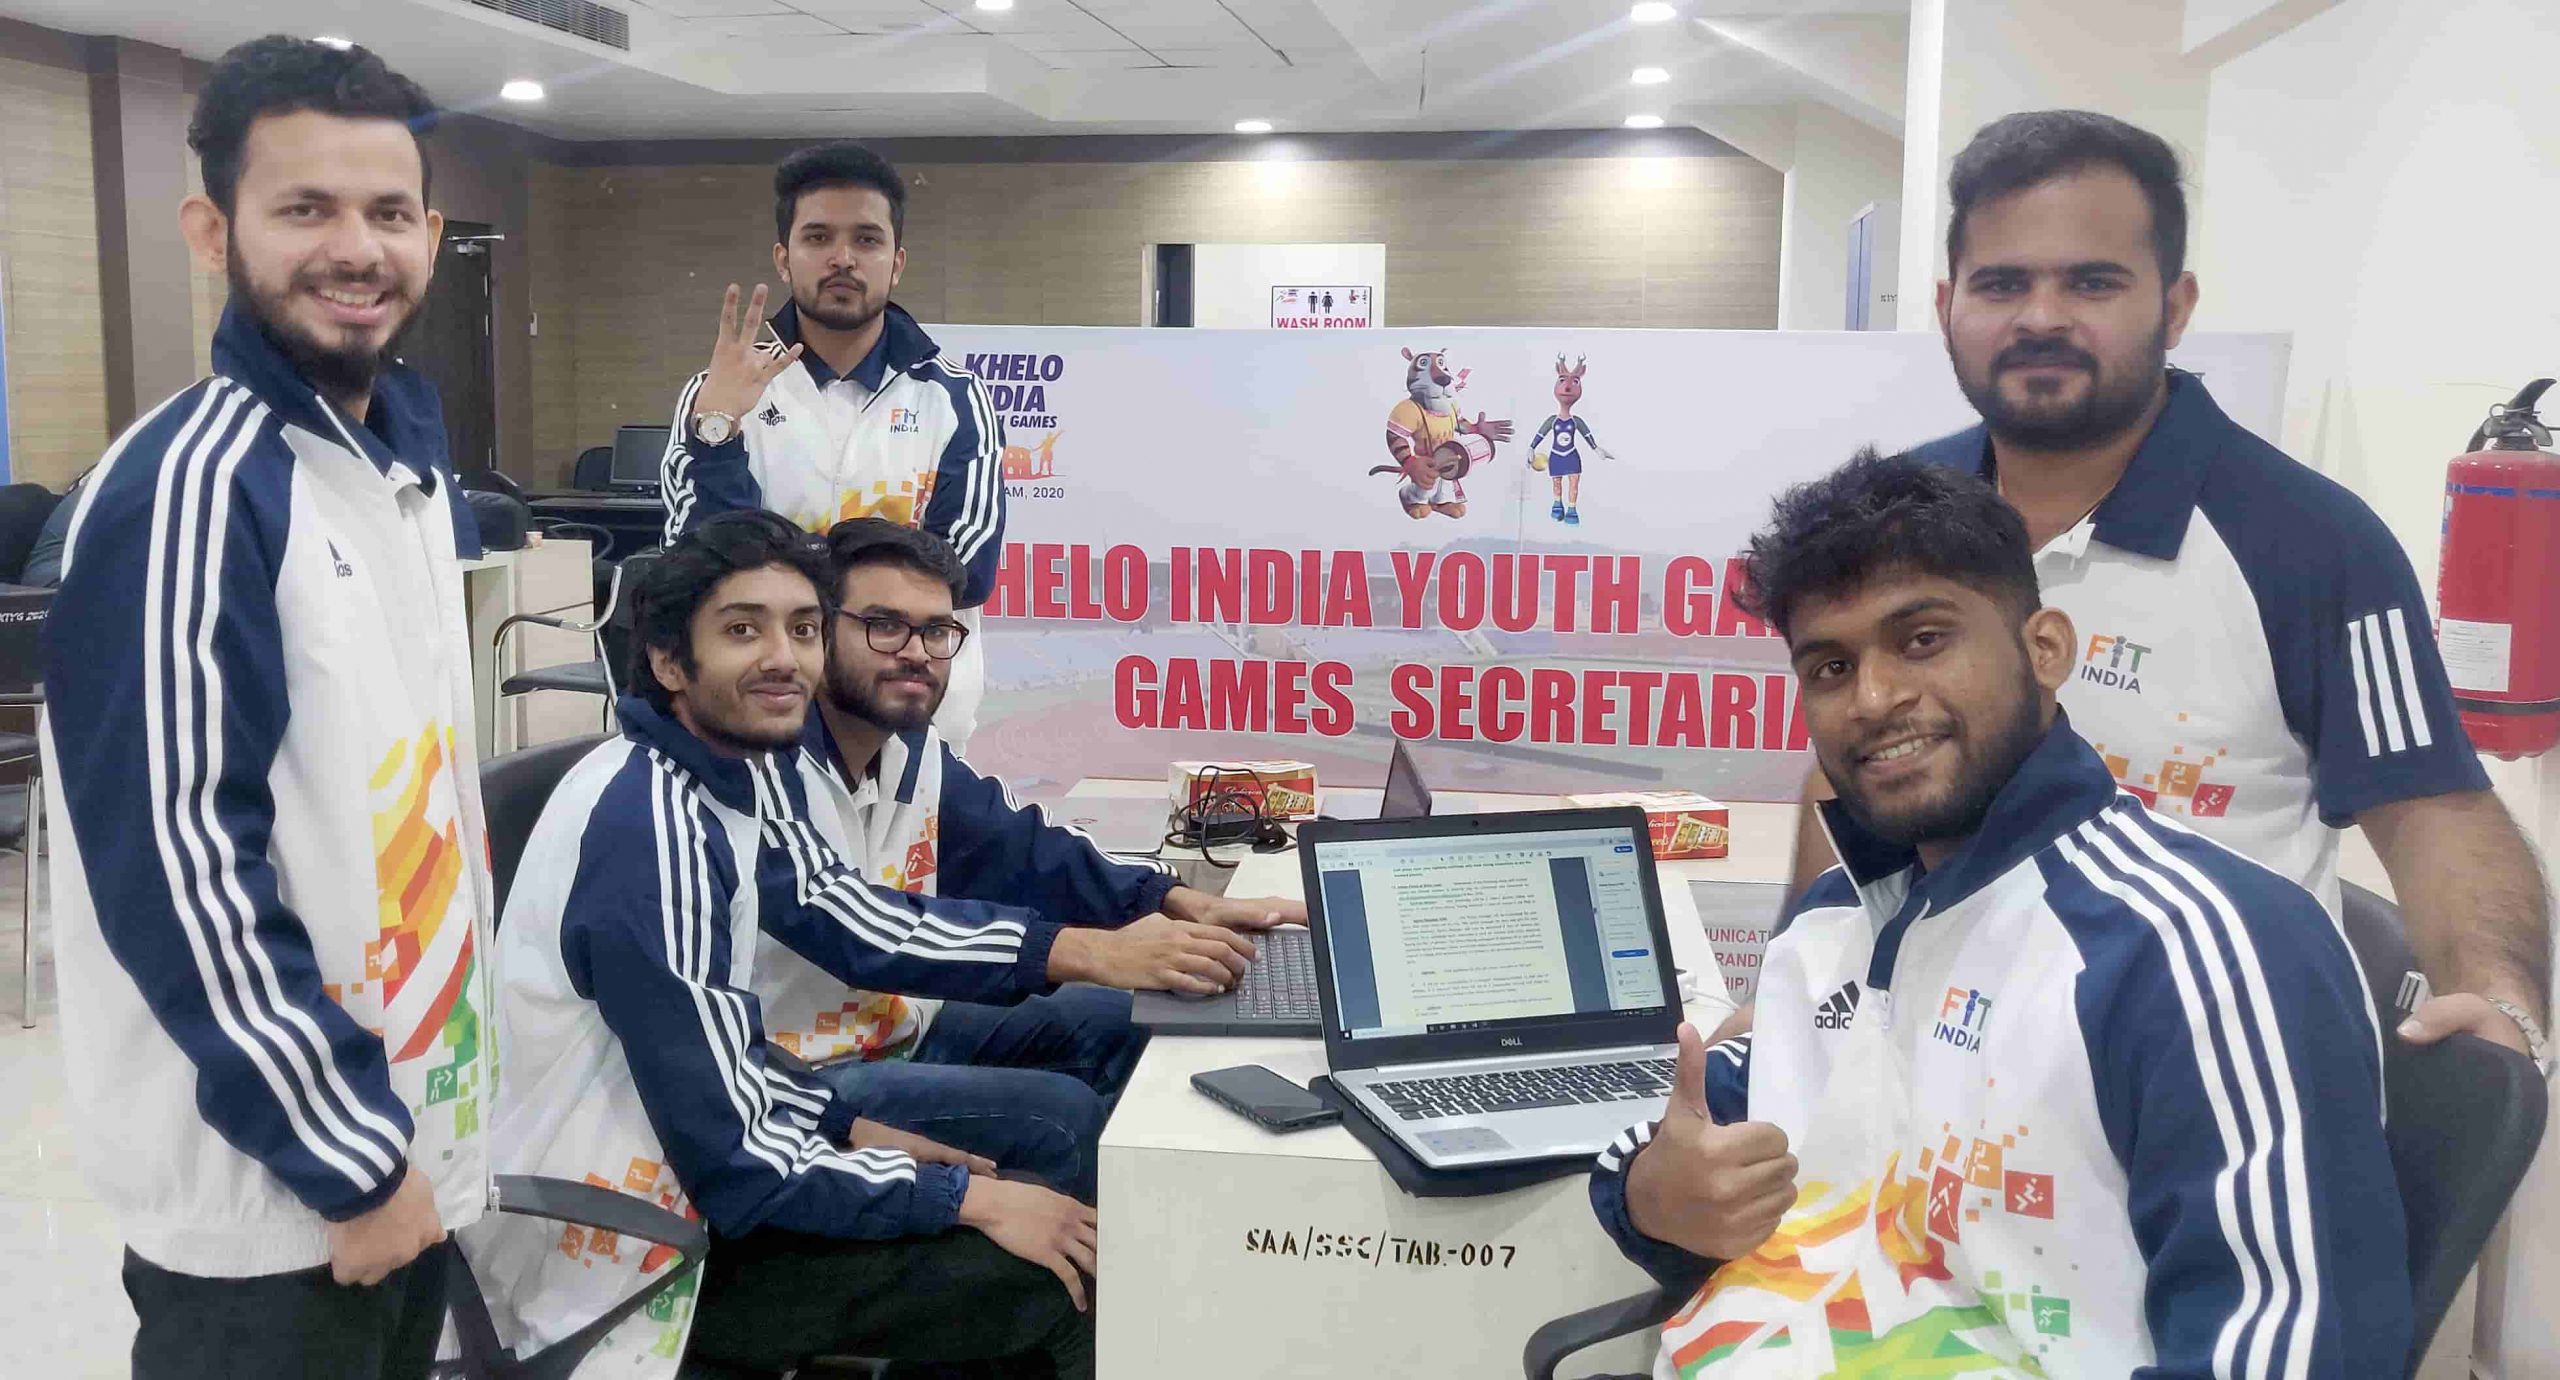 IISM Students at Khelo India Youth Games